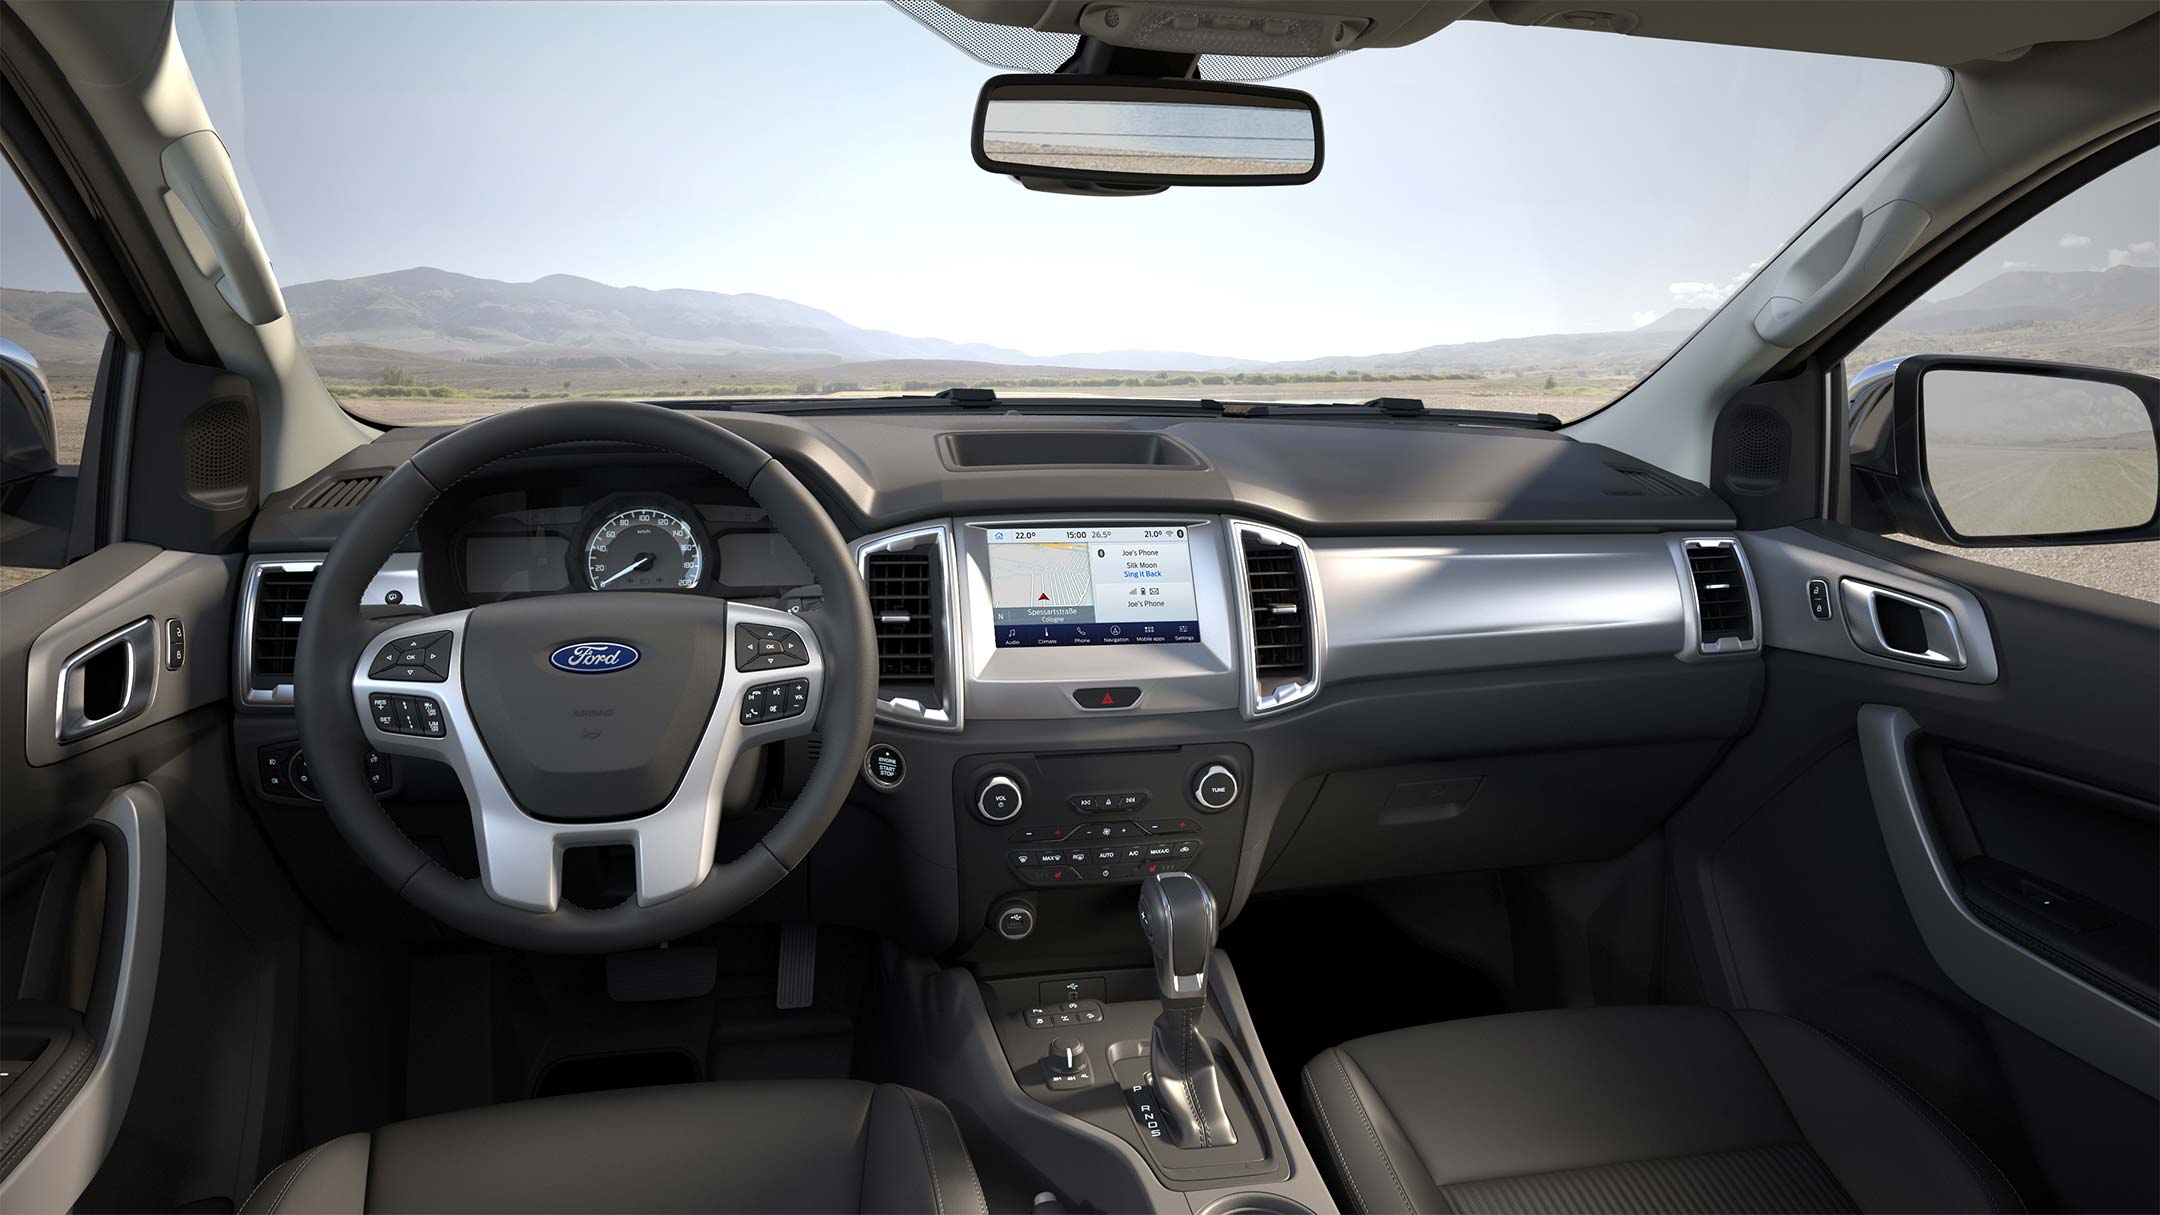 Ford Ranger Innenraum. Detailansicht der Fahrerkabine